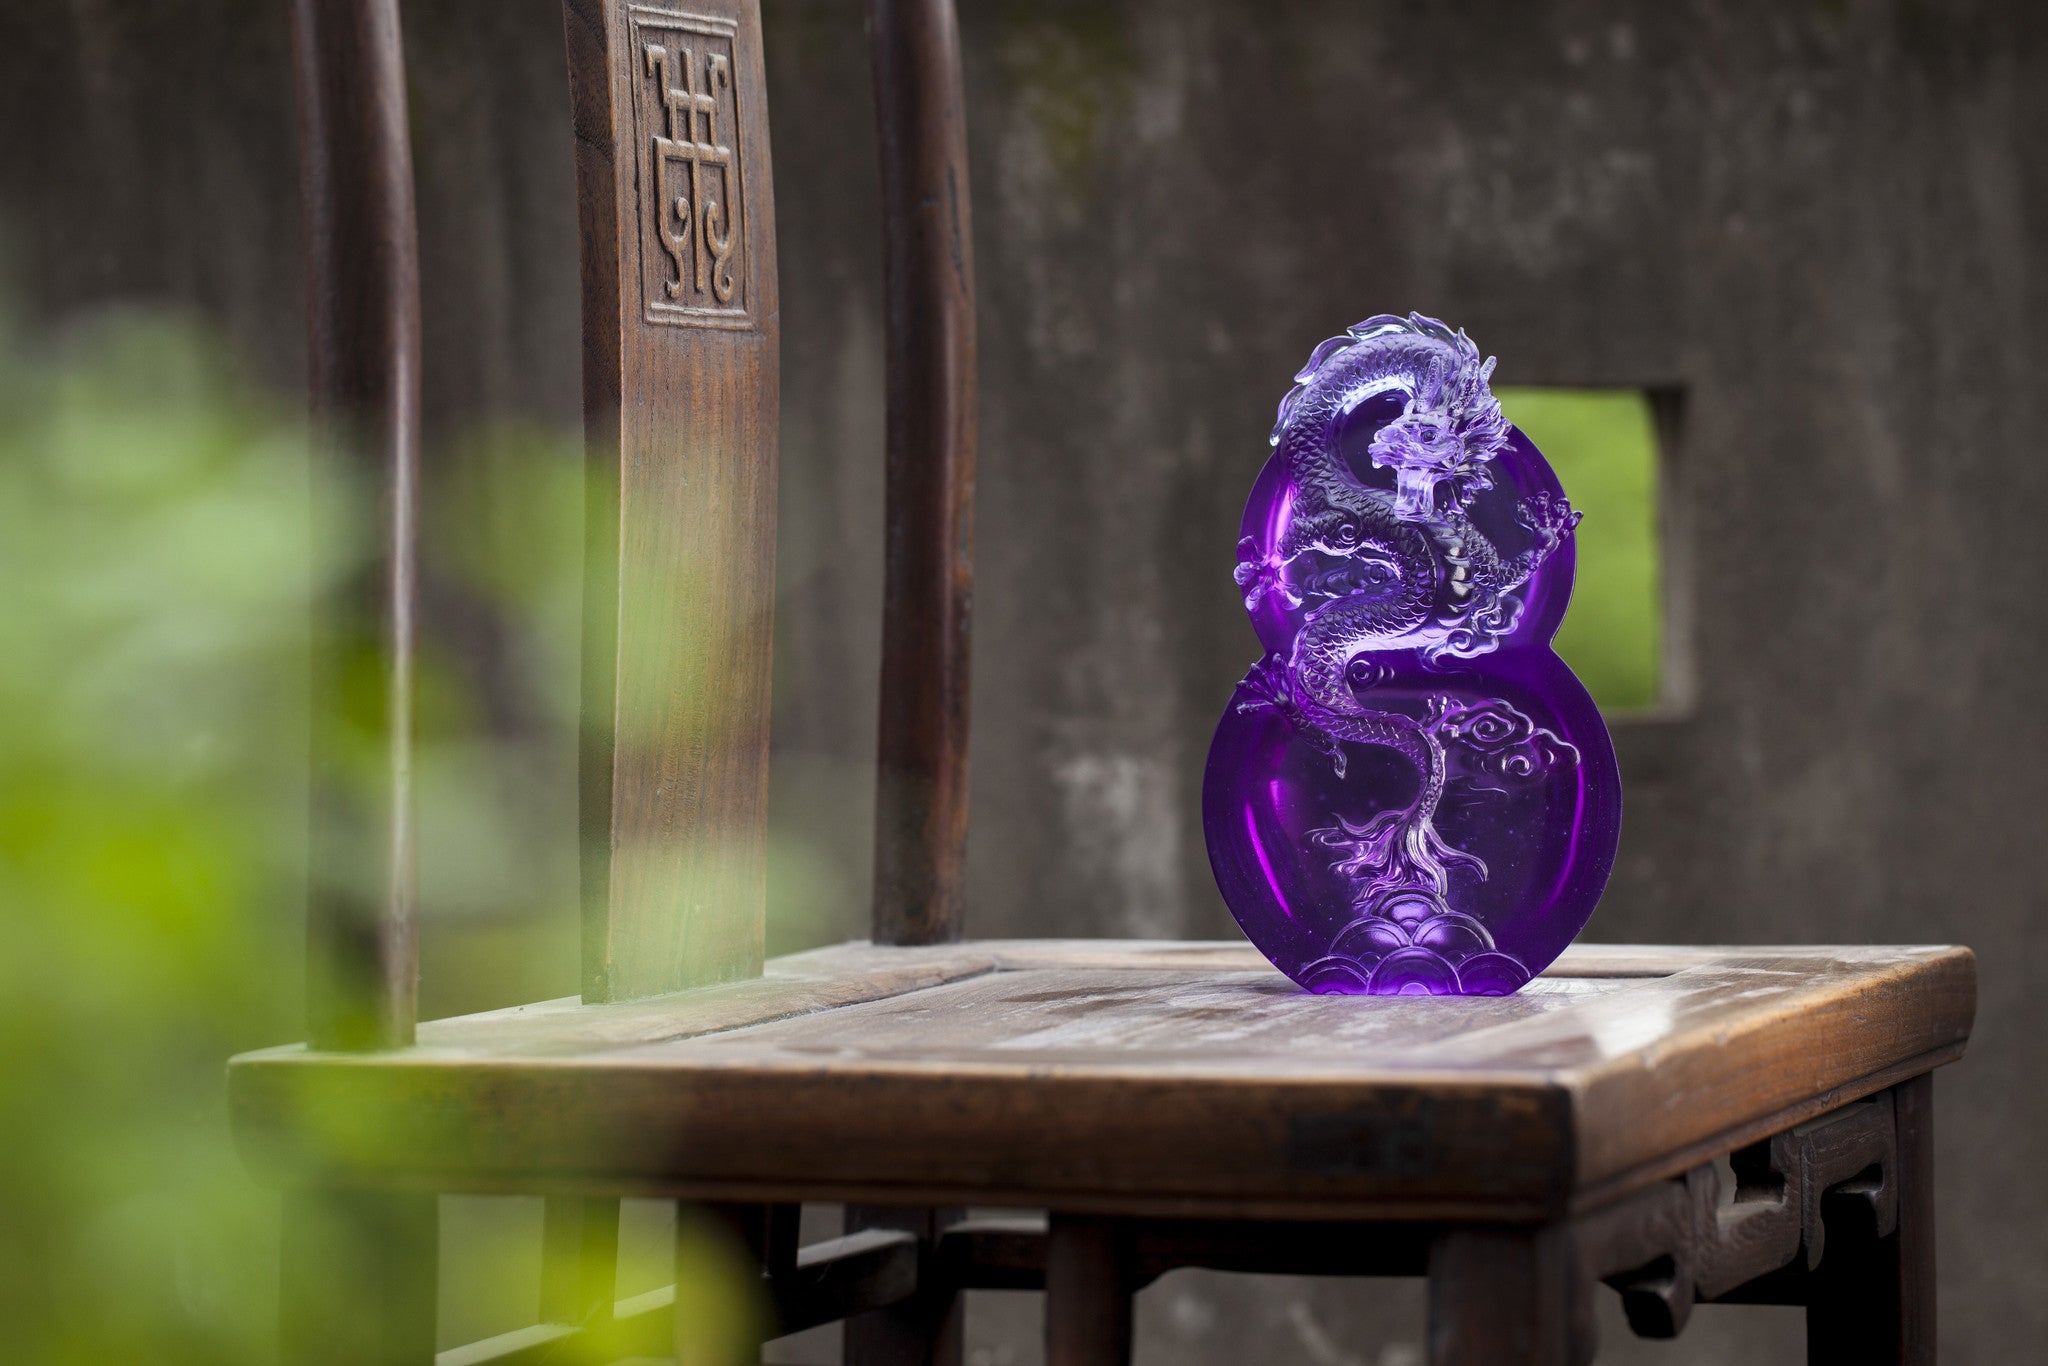 LIULI Crystal Art Crystal Flying Purple Dragon Sculpture on Hulu Gourd, "Ambition of the Heavenly Dragon"